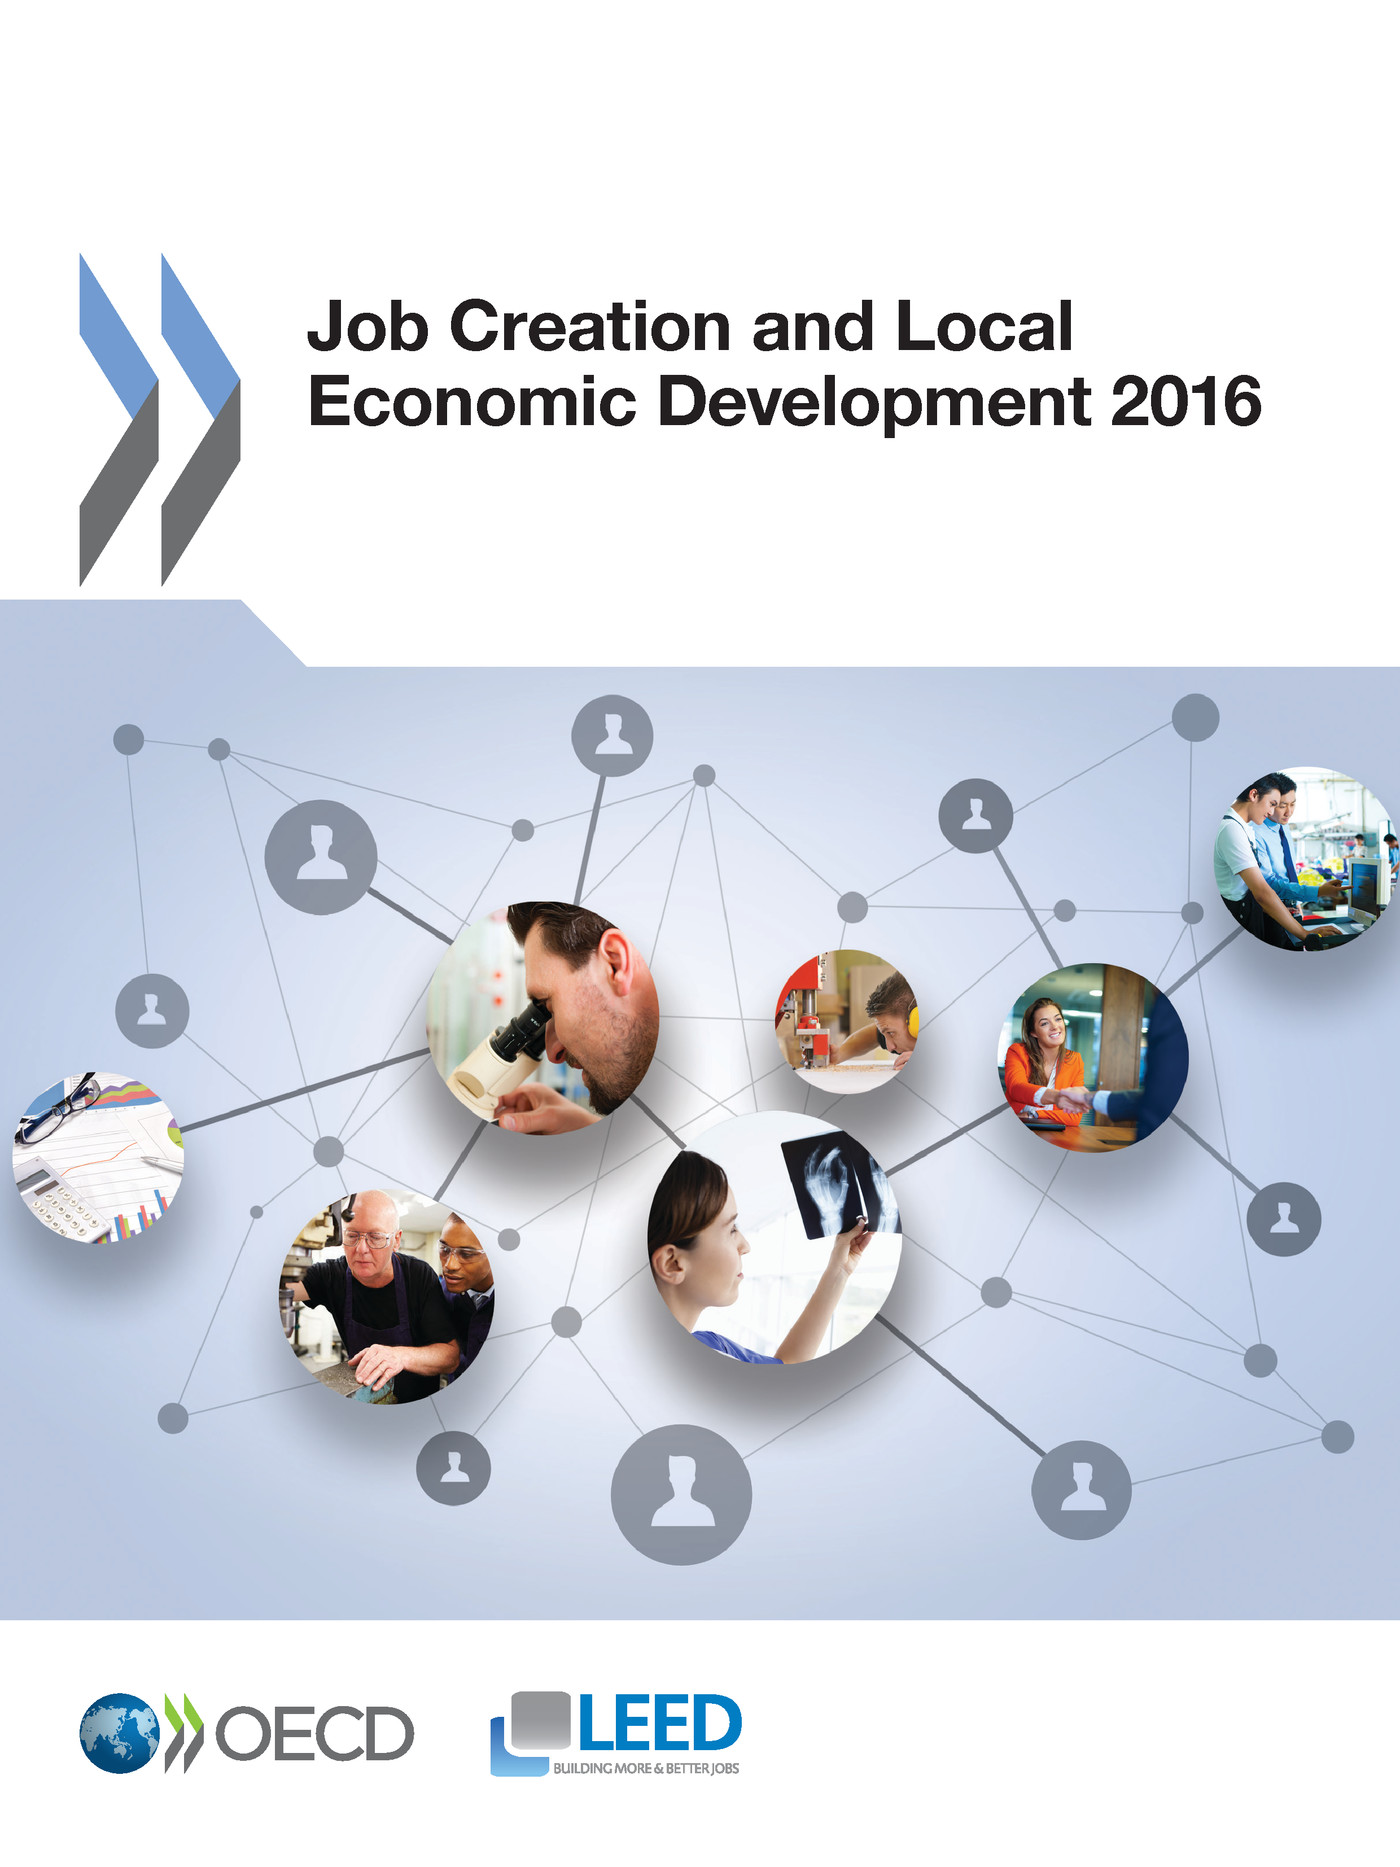 Job Creation and Local Economic Development 2016 -  Collectif - OCDE / OECD